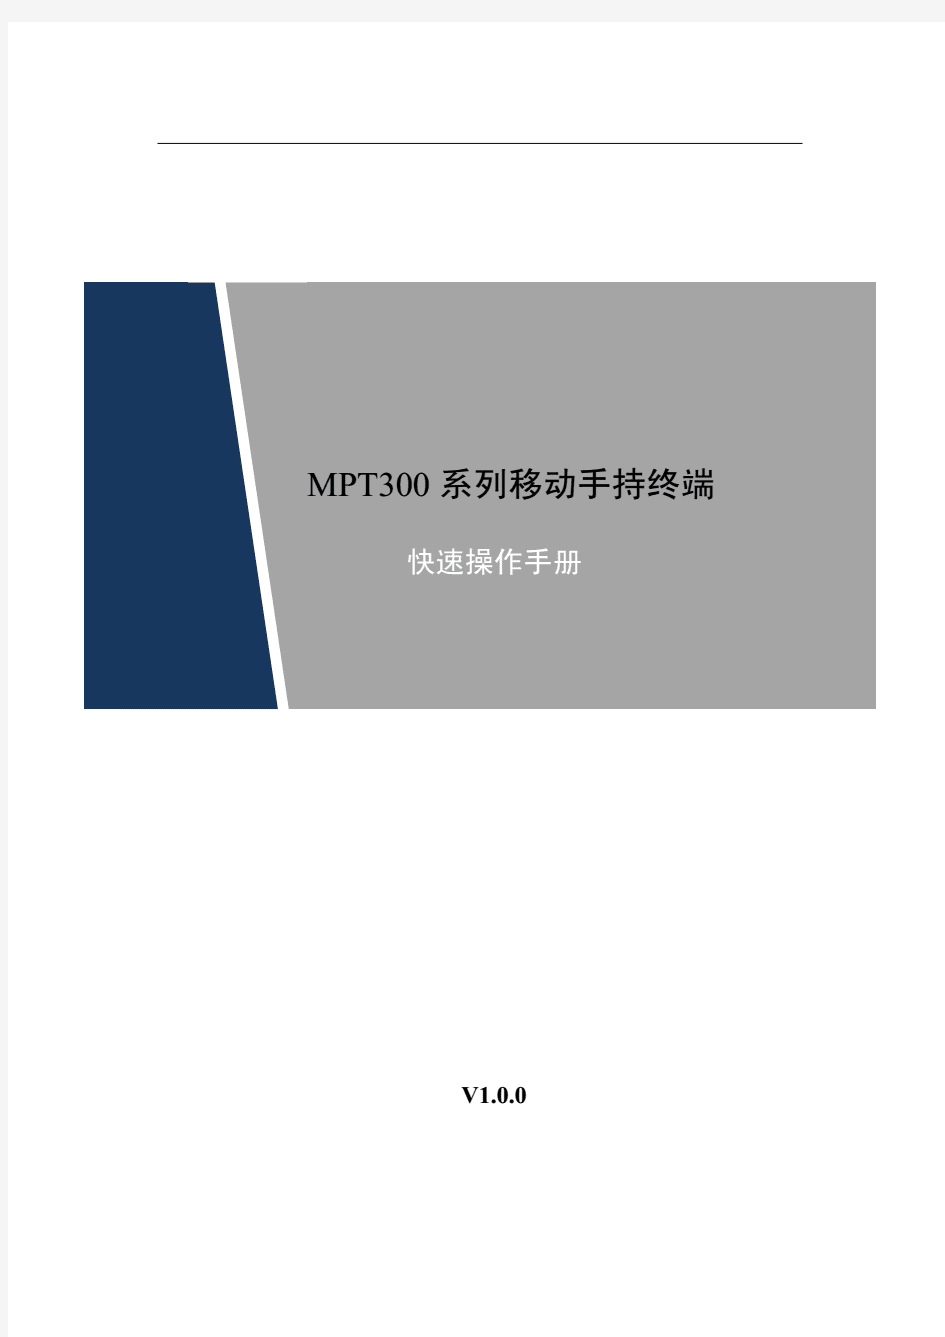 MPT300系列移动手持终端_使用说明书_V1.0.0.